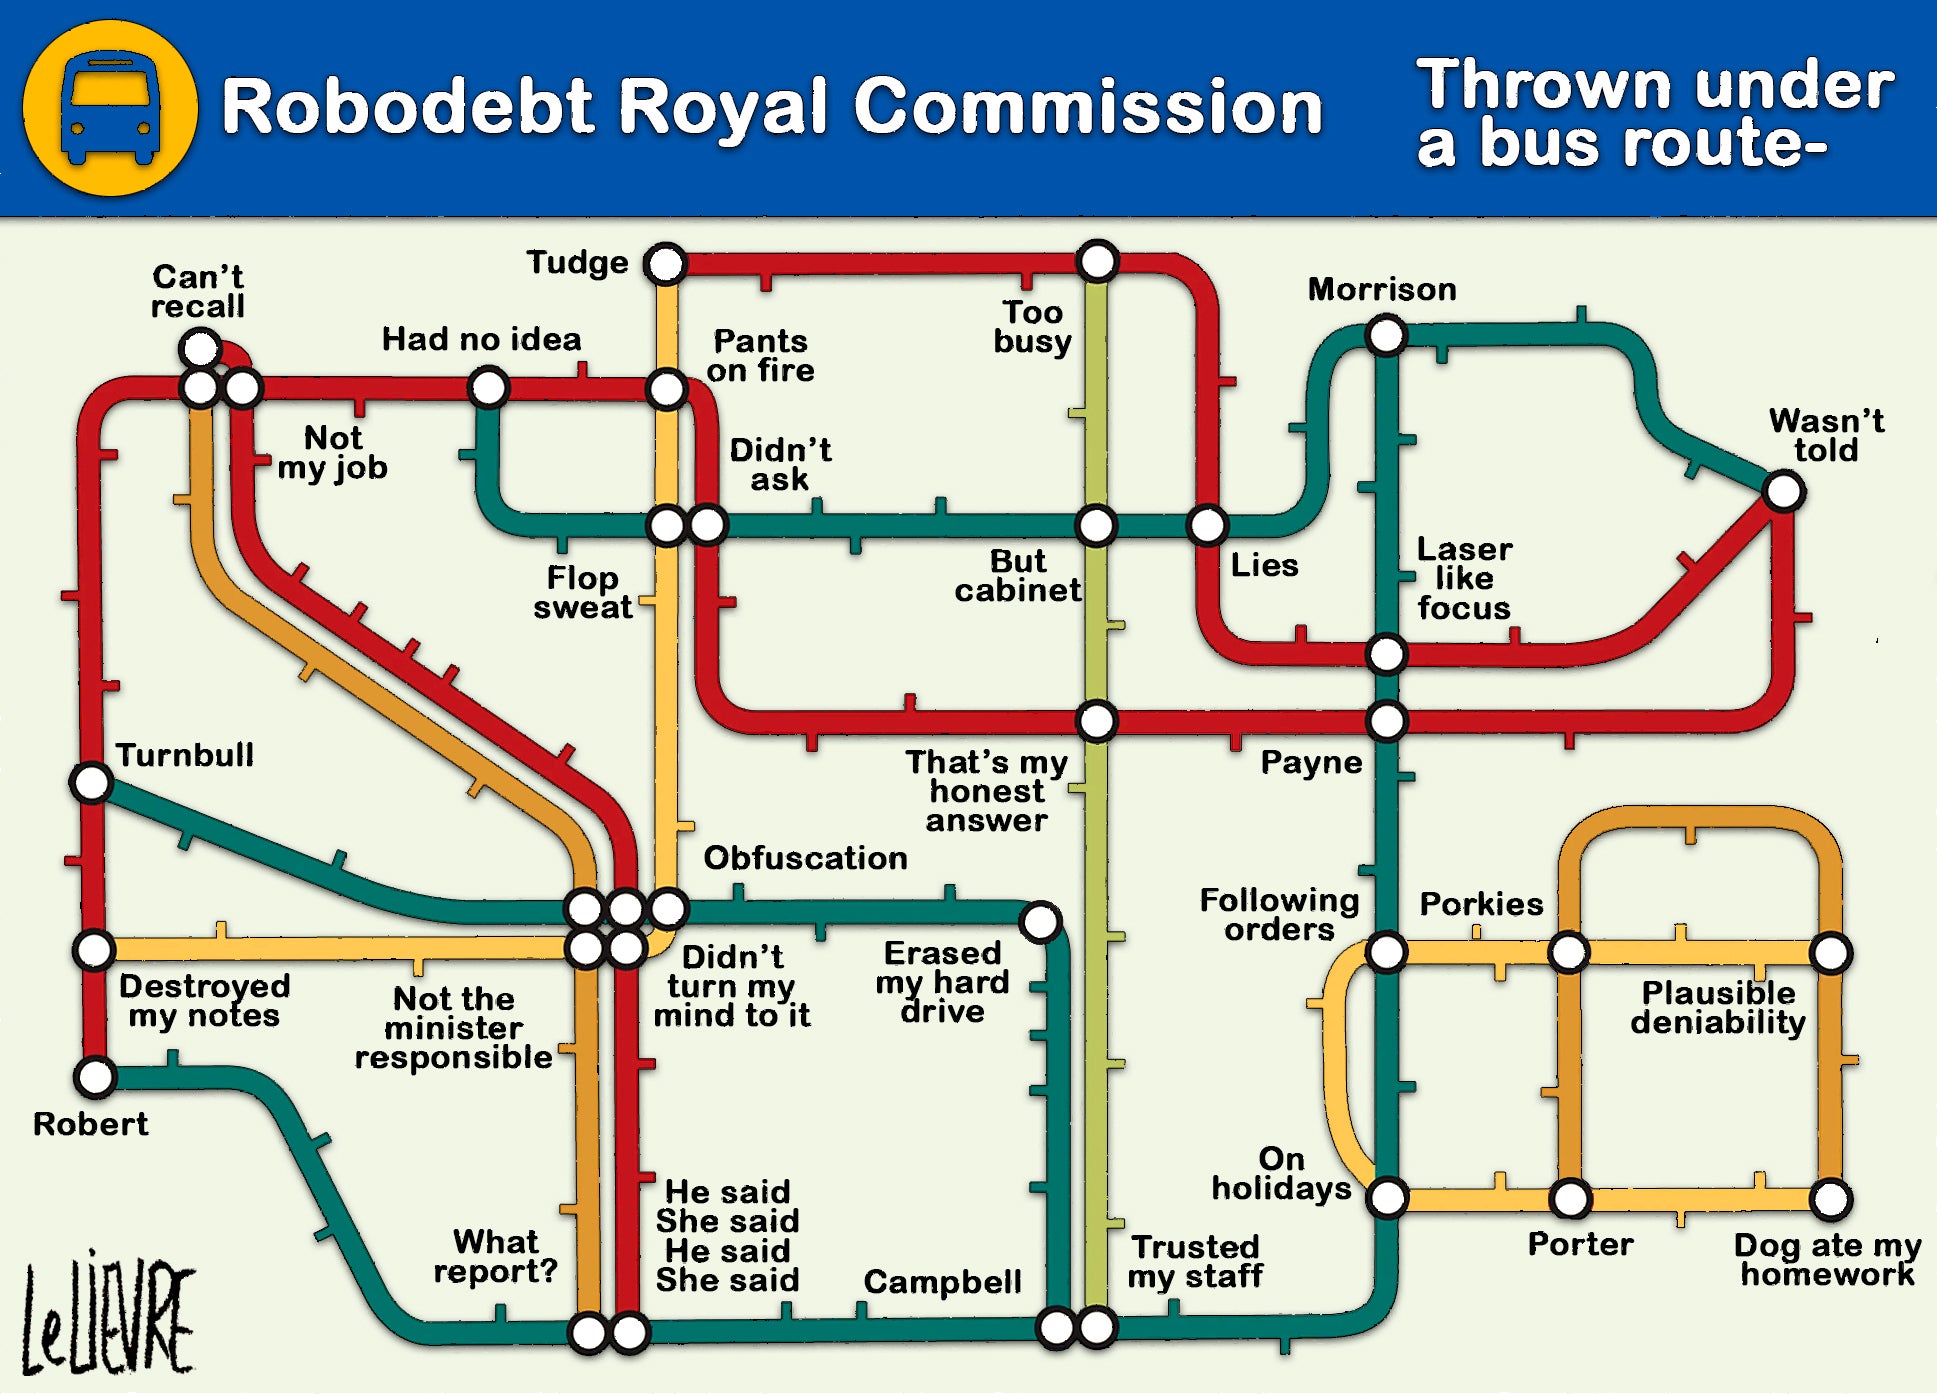 robodebt-royal-comission-thrown-under-a-bus-route-glen-le-v0-v4w1nmvam8ma1.jpg